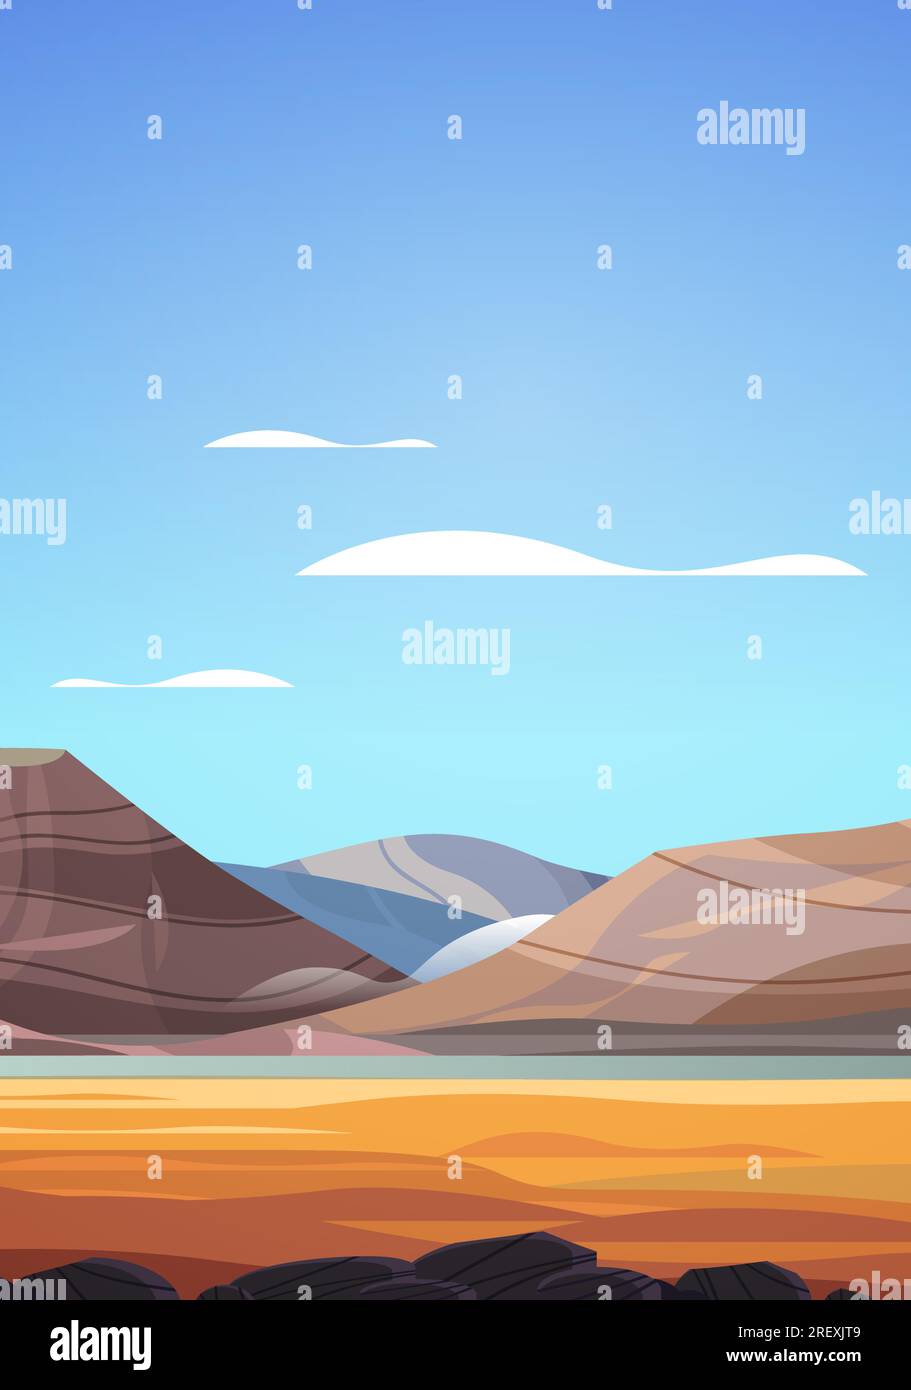 desert landscape with golden sand dunes over mountains Stock Vector